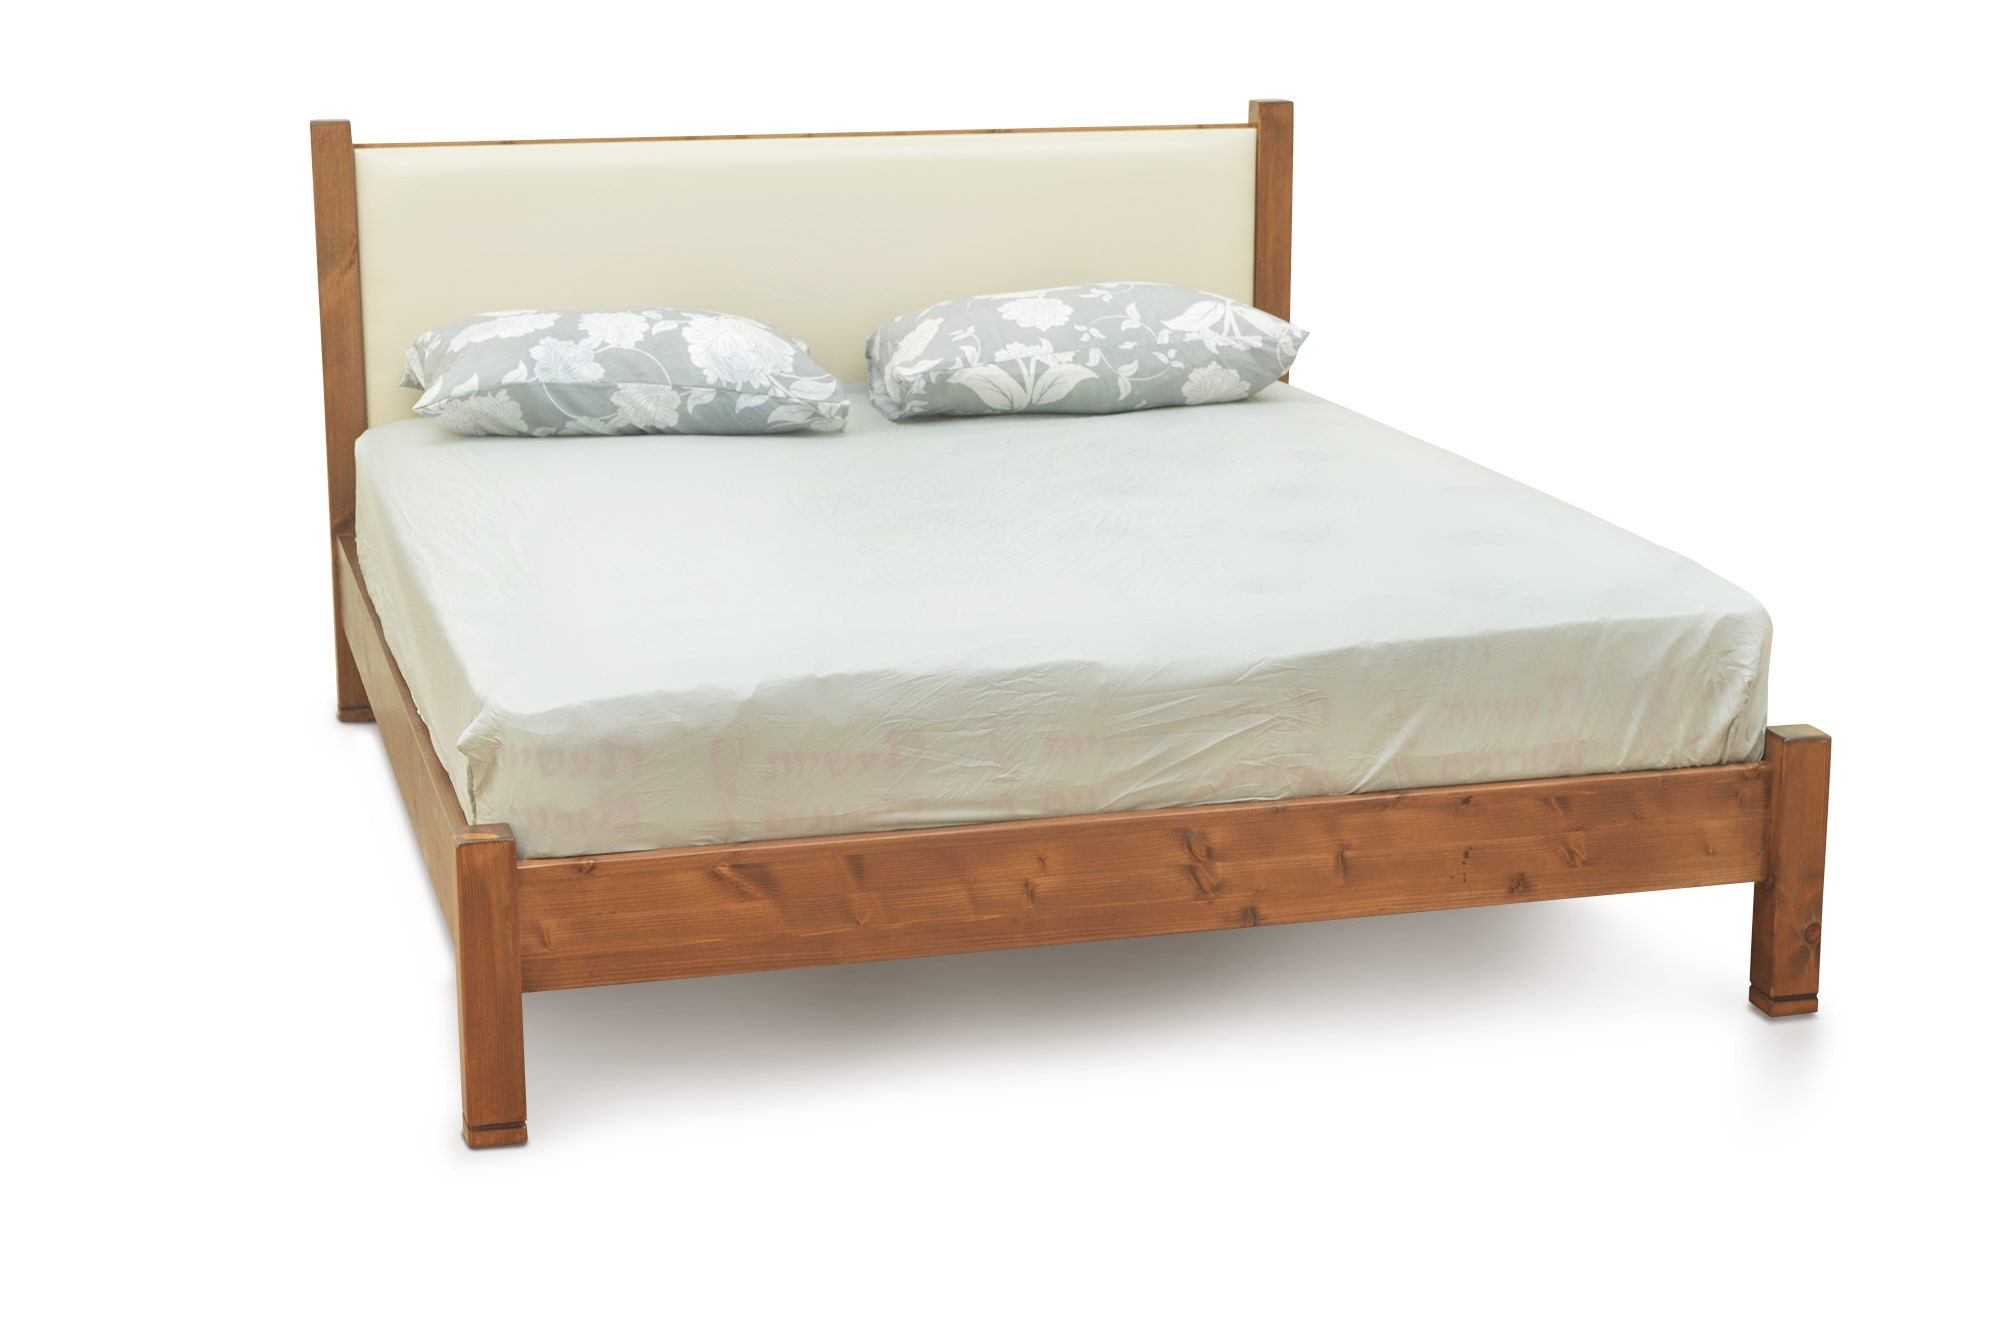 loyalty Encommium grow up מיטה זוגית מעץ מלא צבוע עם ראש מיטה מרופד - דגם מאור | חלומות רשת מיטות  ומזרונים